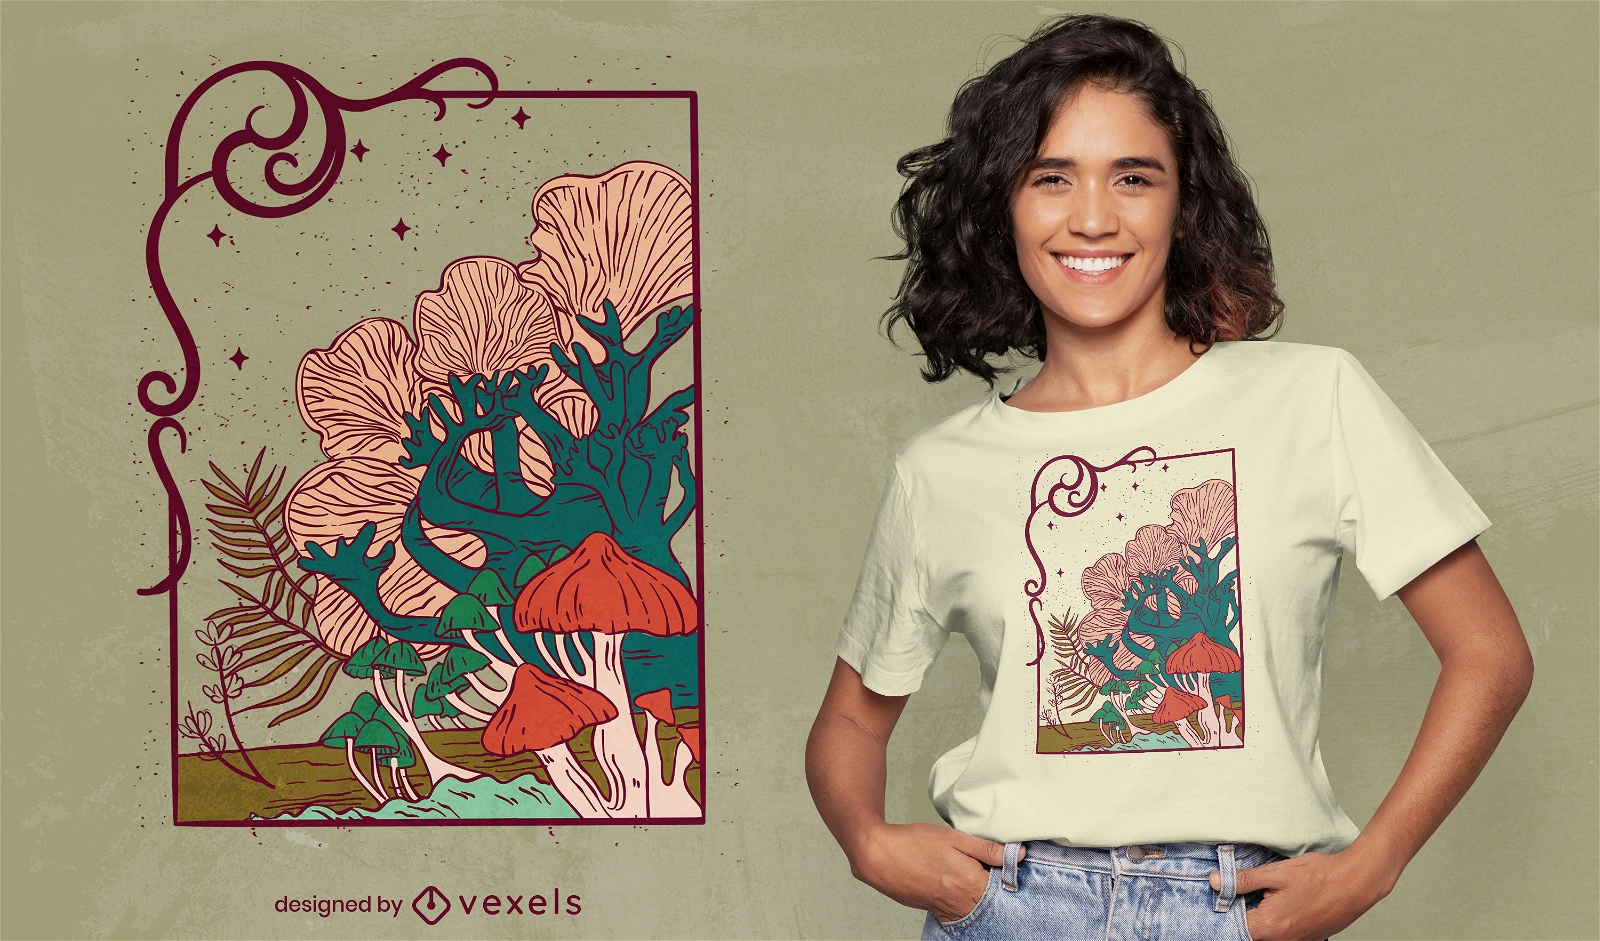 Cool mushrooms illustration t-shirt design